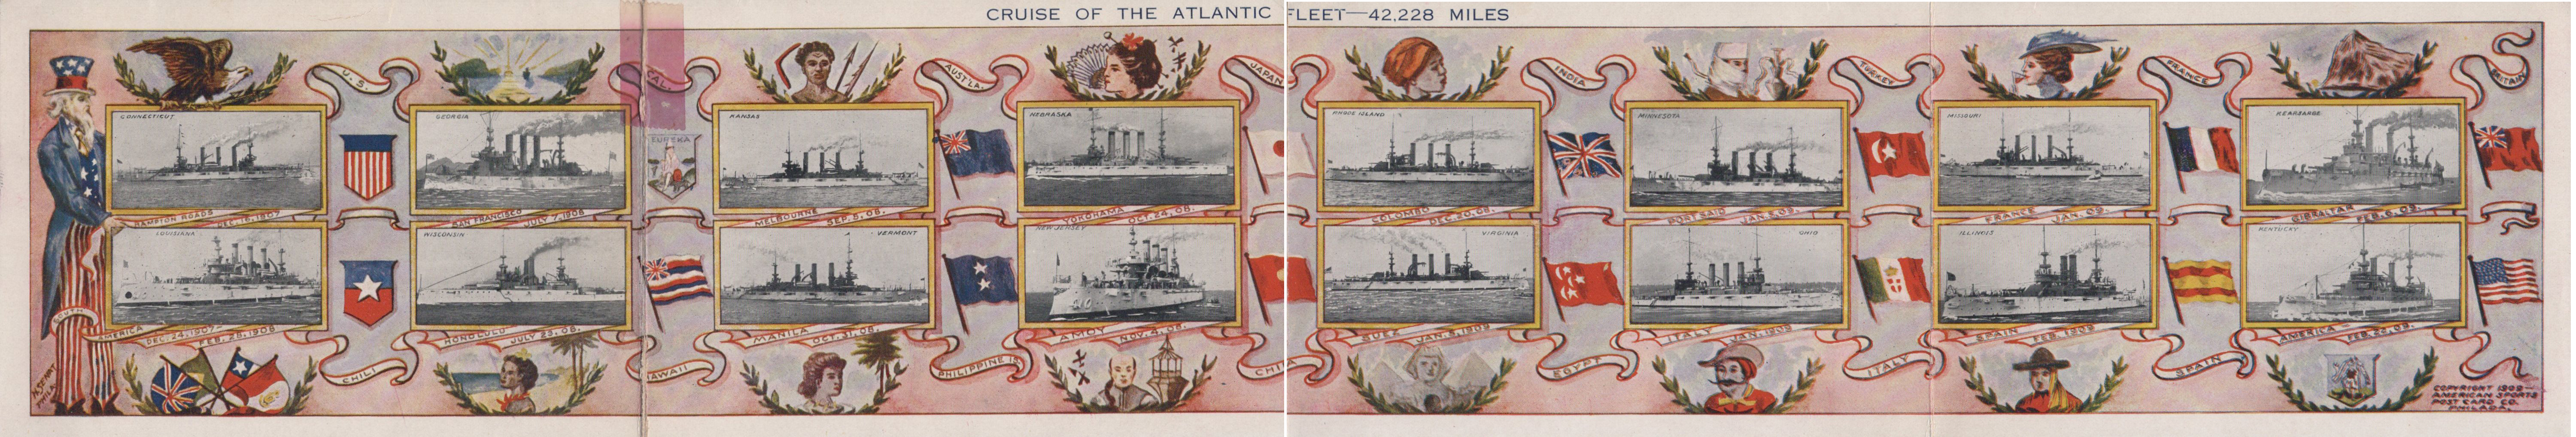 Cruise of the Atlantic Fleet - Hampton Roads